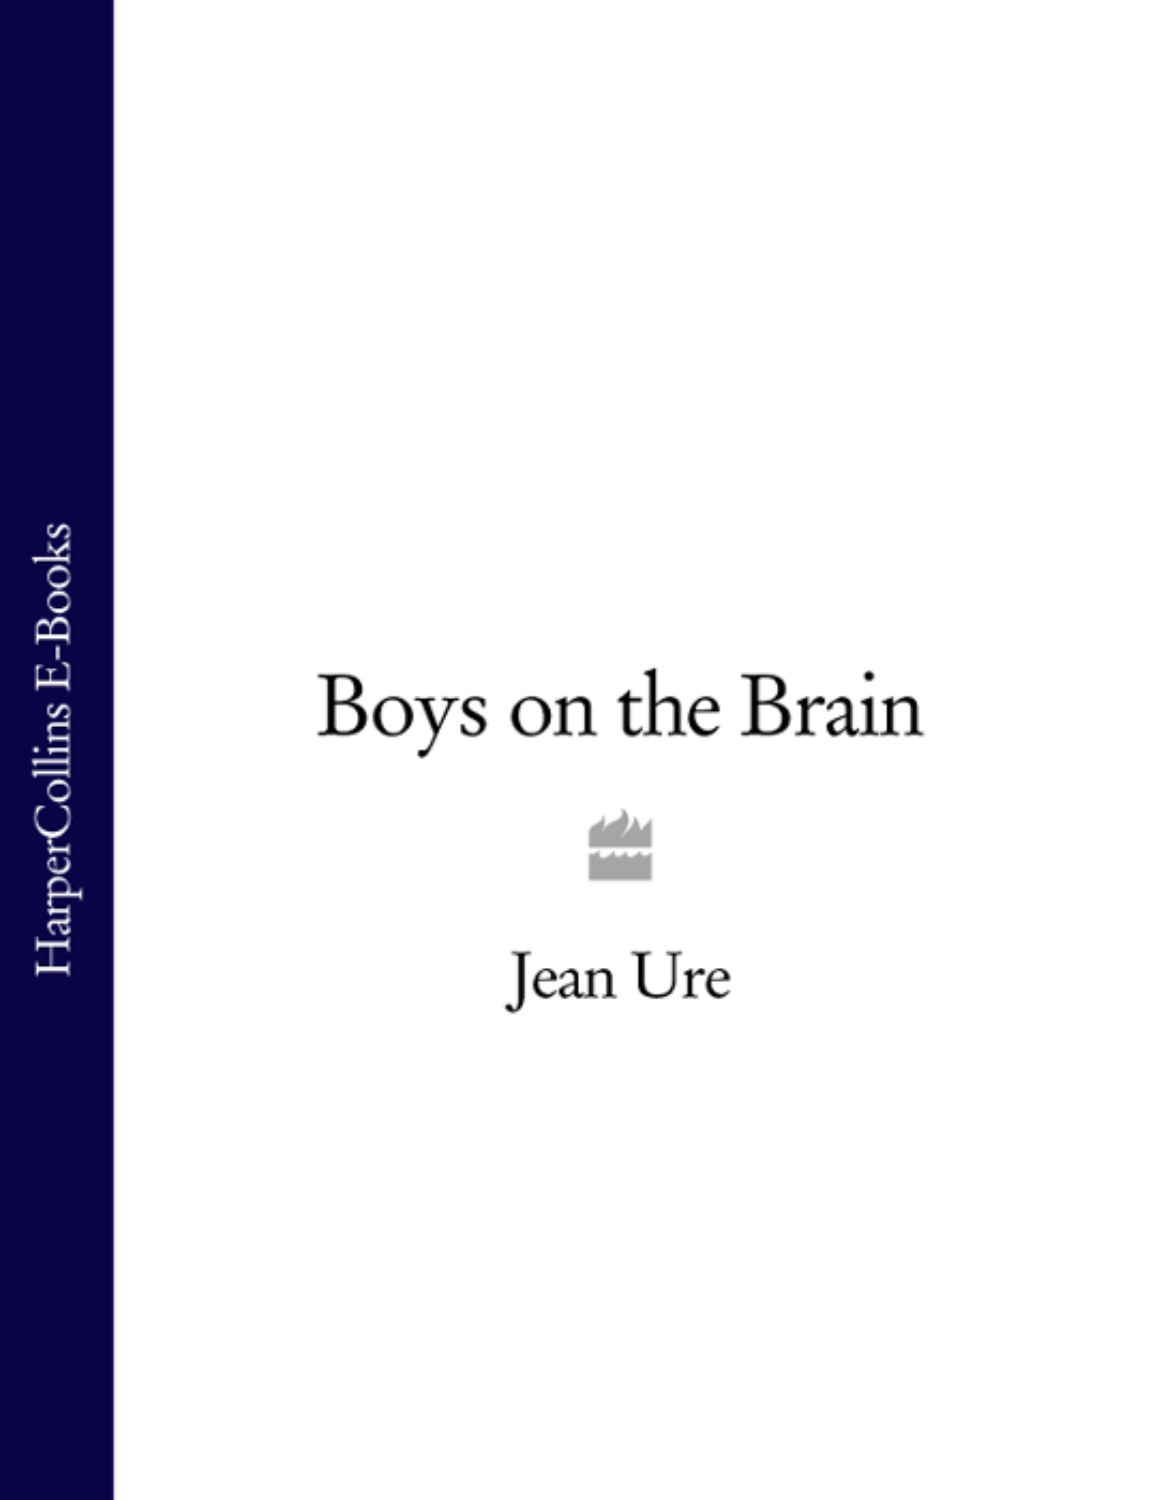 Цифровая книга "Boys on the Brain" Ure Jean – купить книгу ...